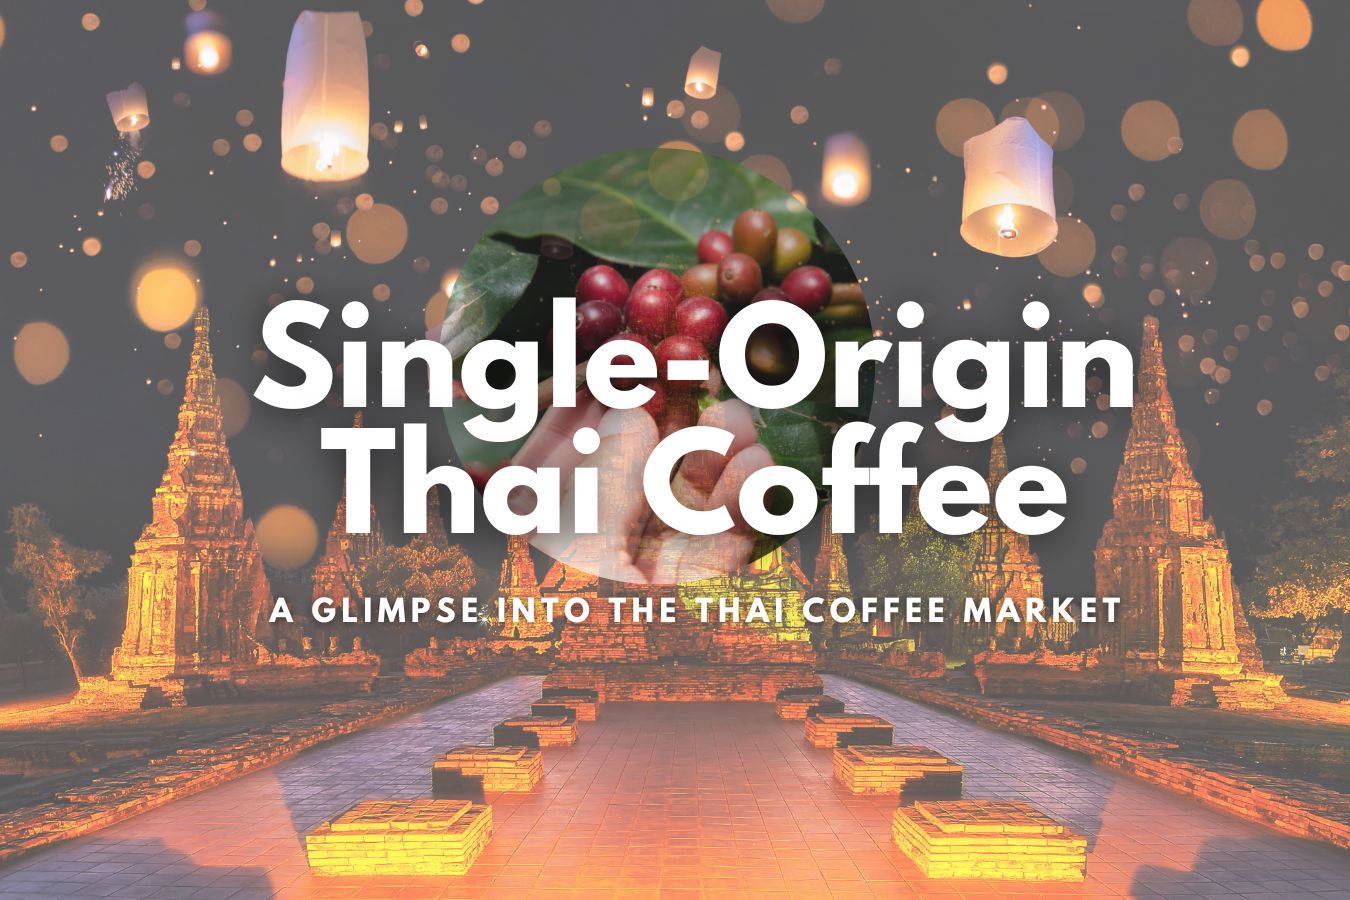 Exploring the Single-Origin Thai Coffee A Glimpse into the Thai Coffee Market